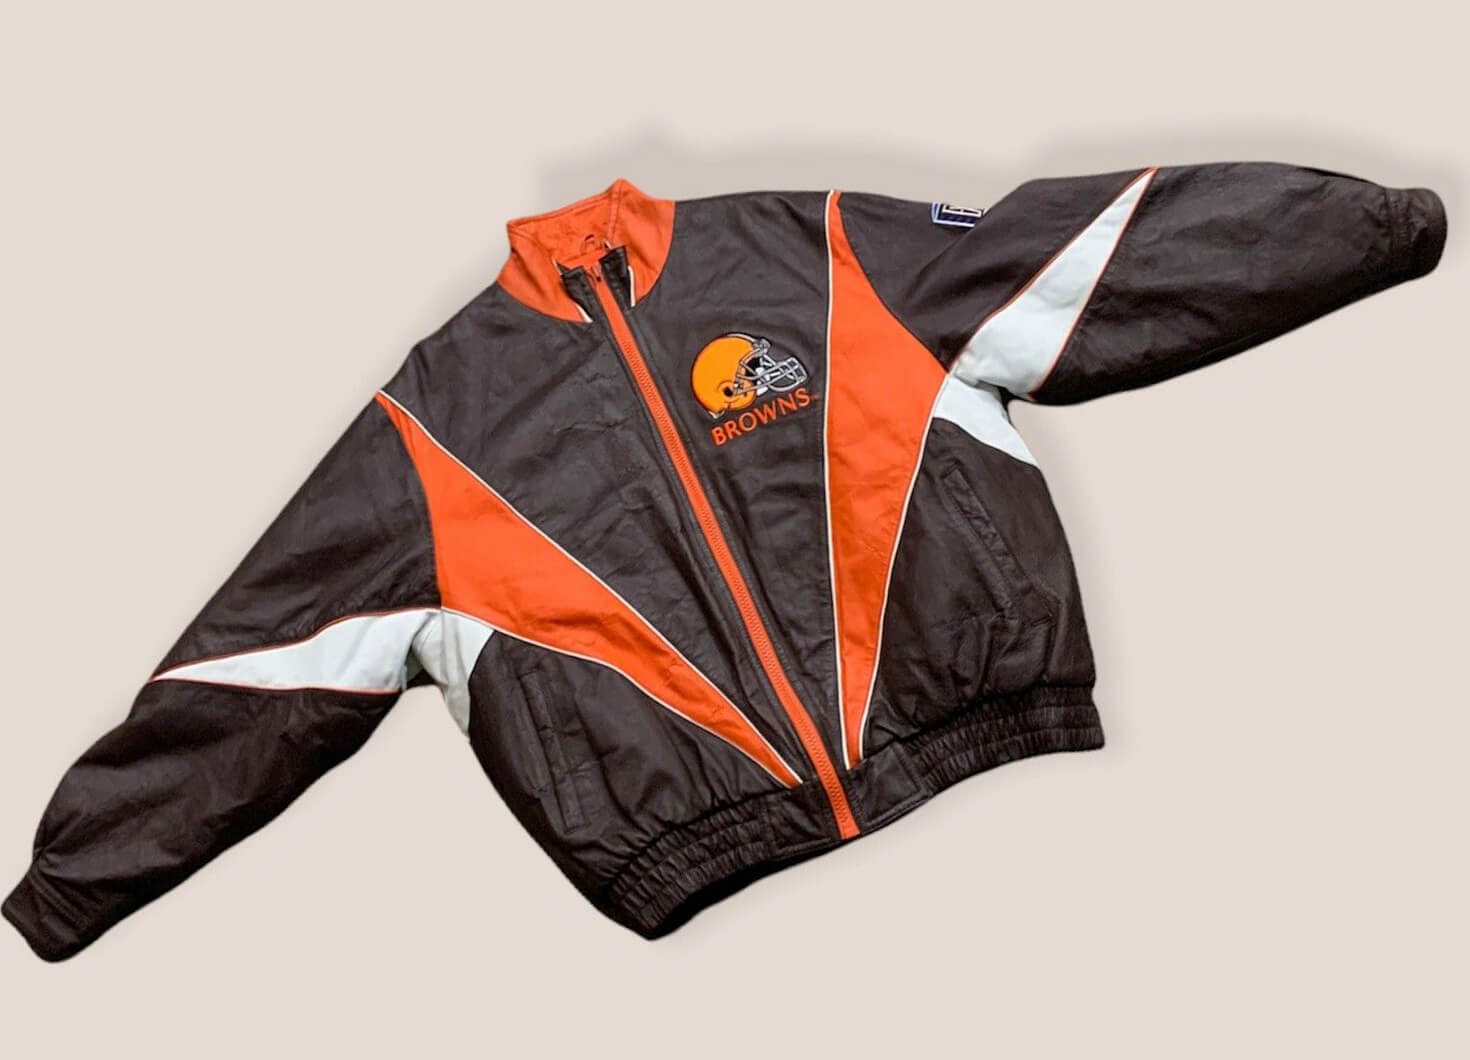 cleveland browns winter jacket